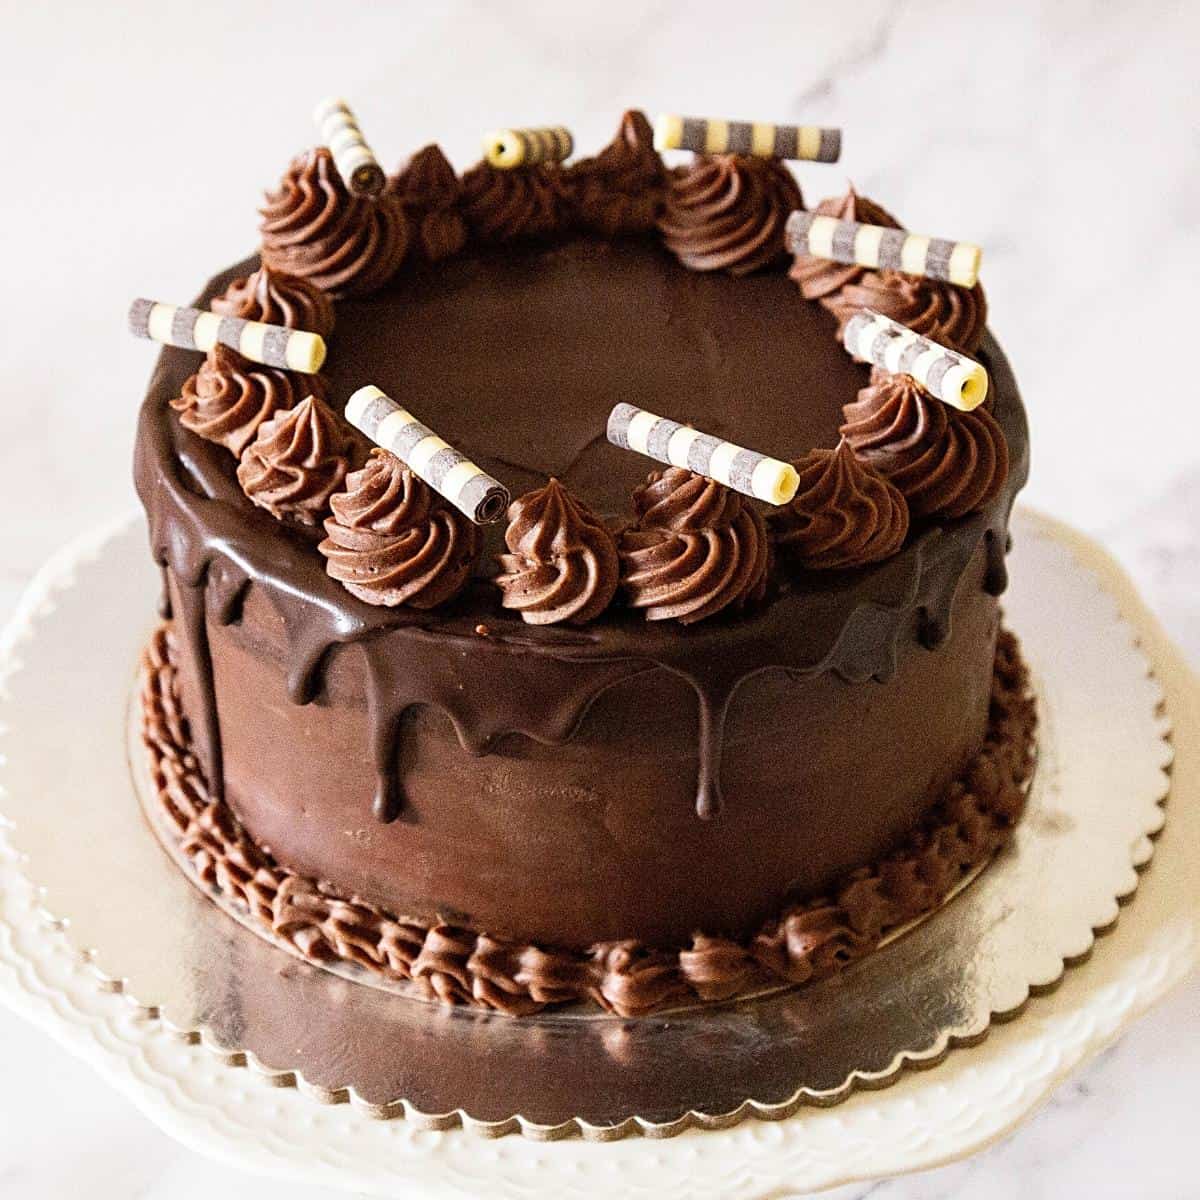 A chocolate cake on a cake board.